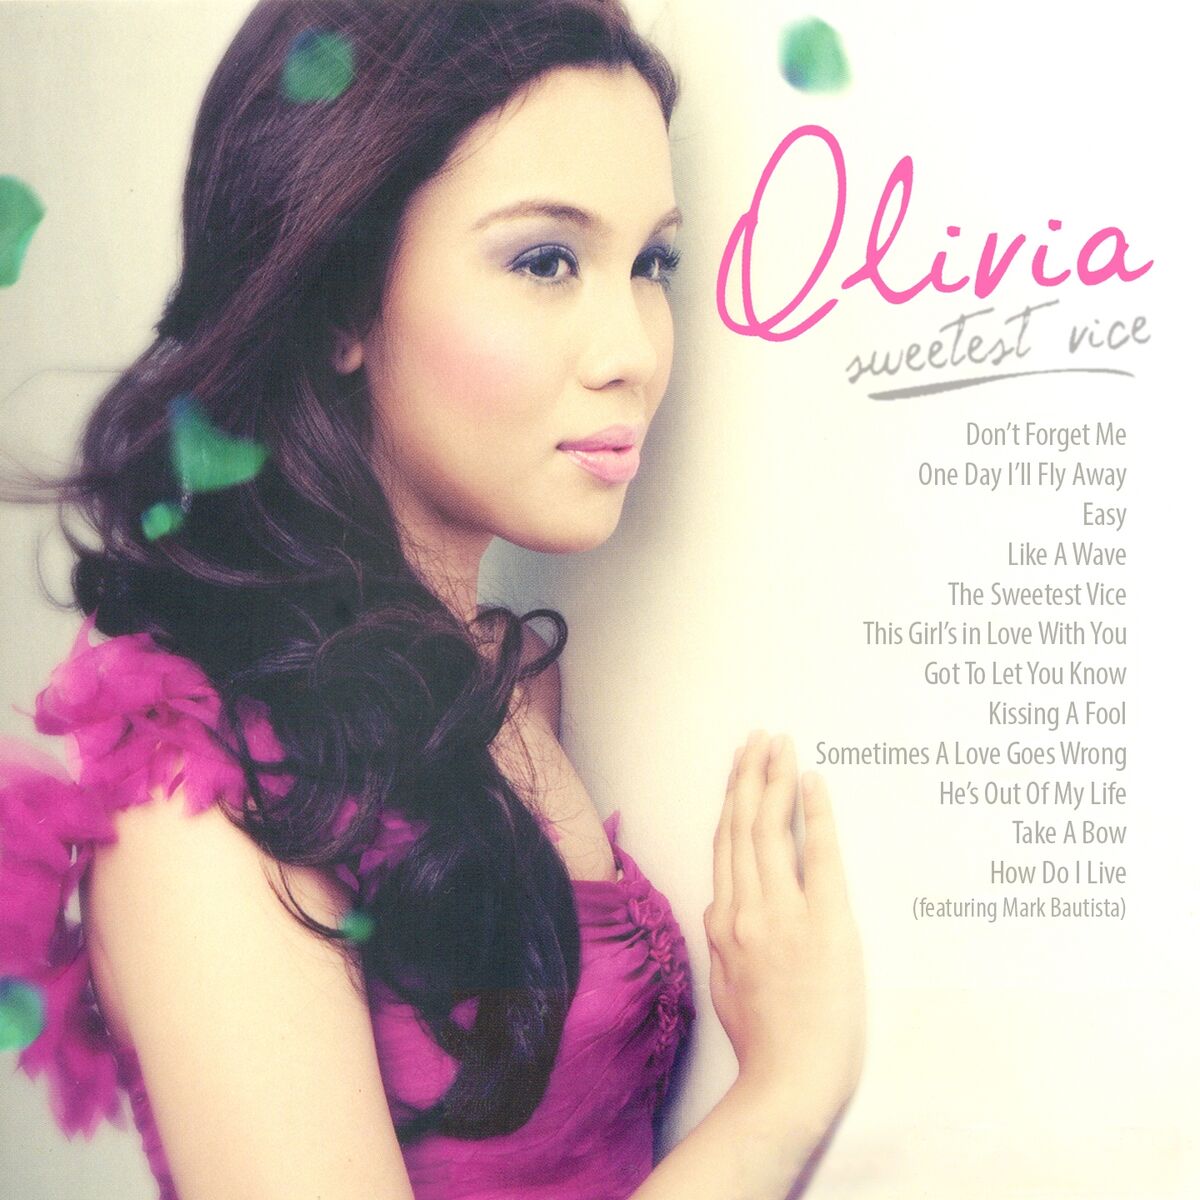 Olivia: albums, songs, playlists | Listen on Deezer